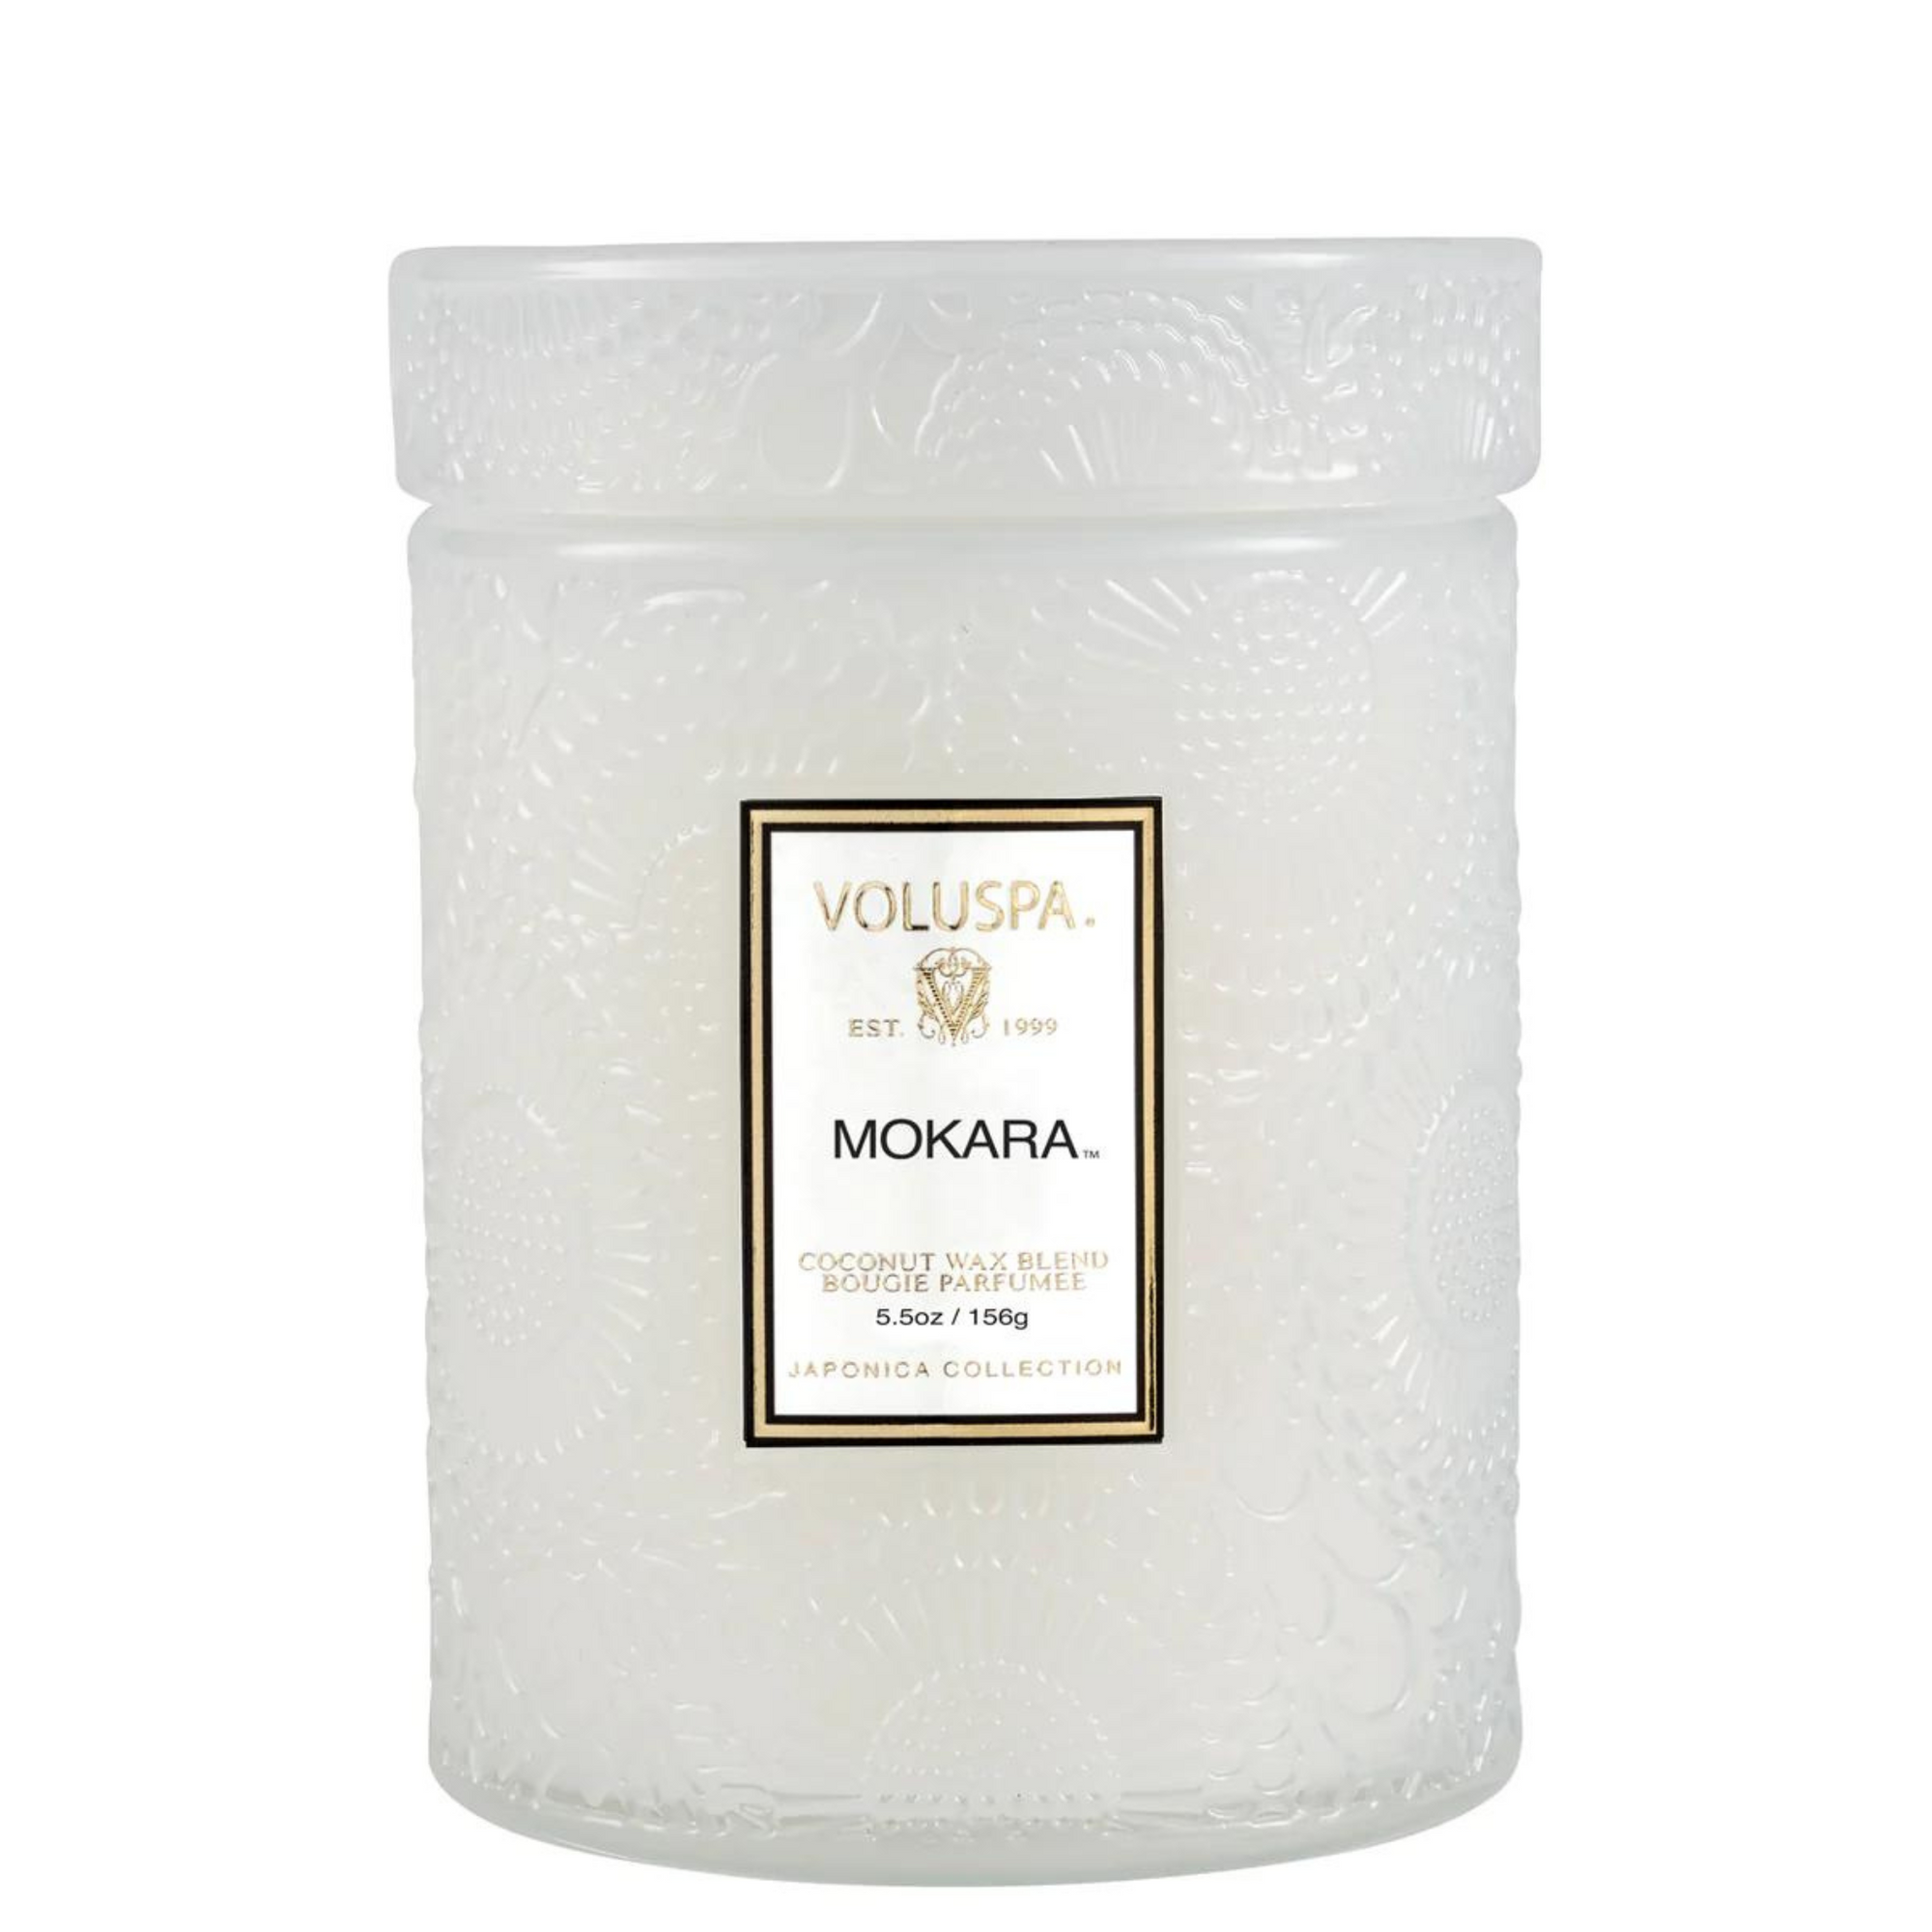 Mokara-Small Candle